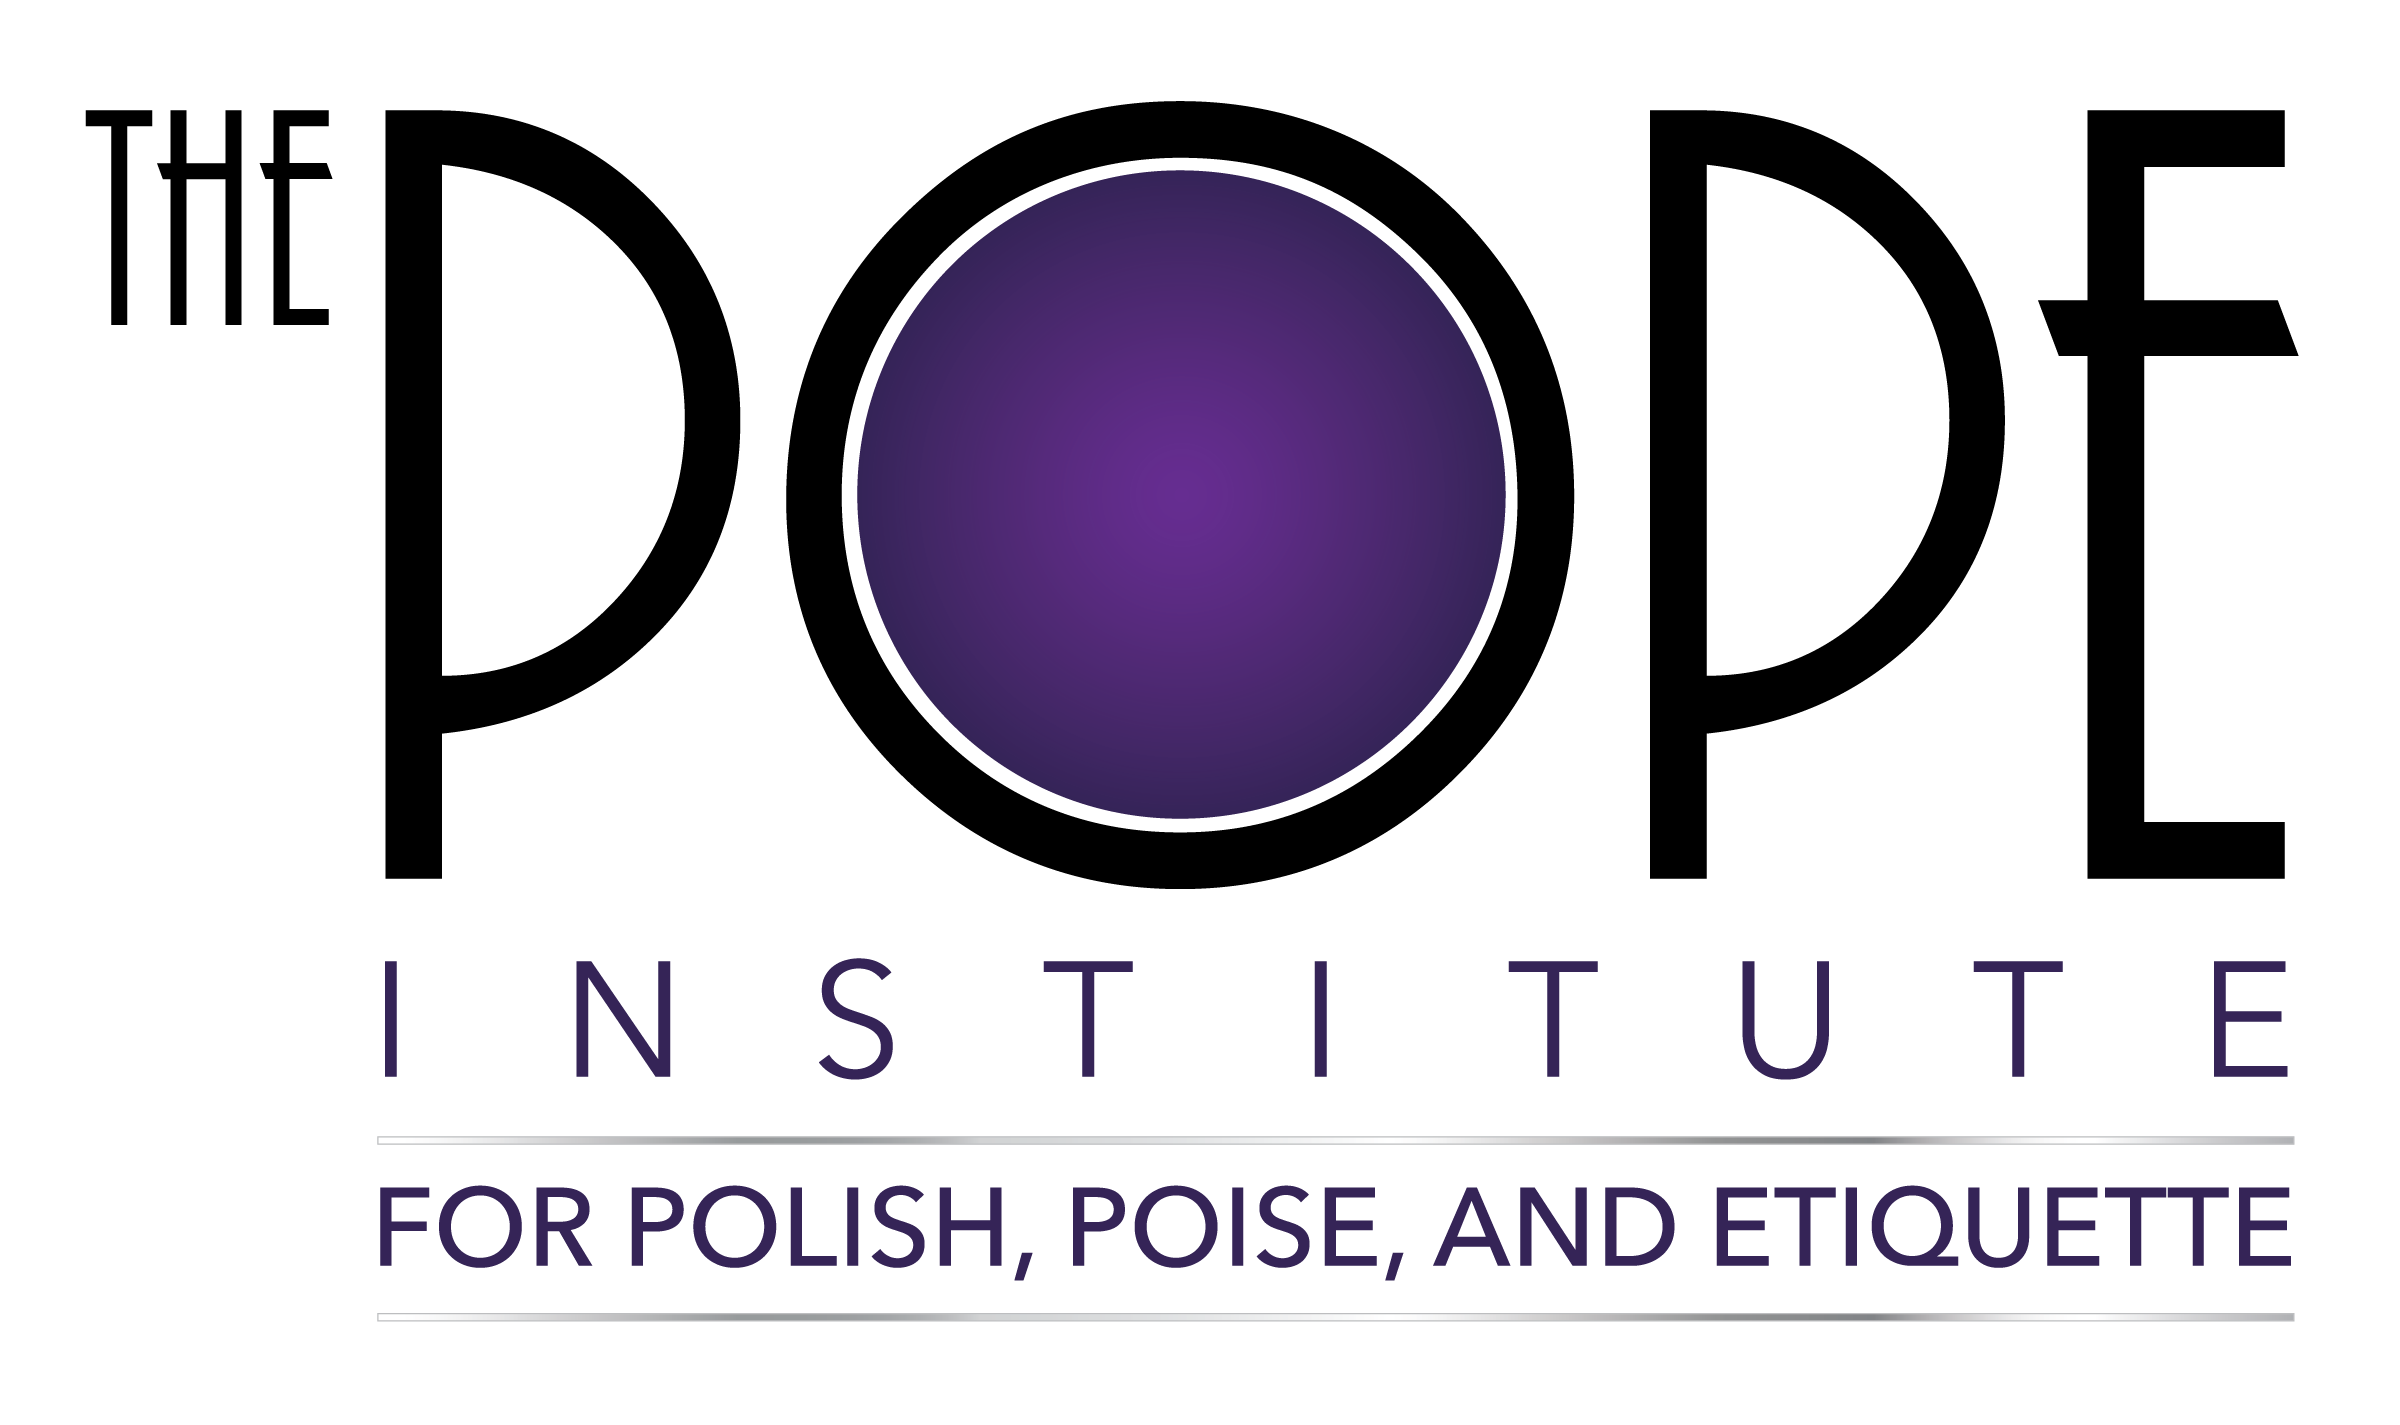 The Pope Institute for Polish, Poise, & Etiquette